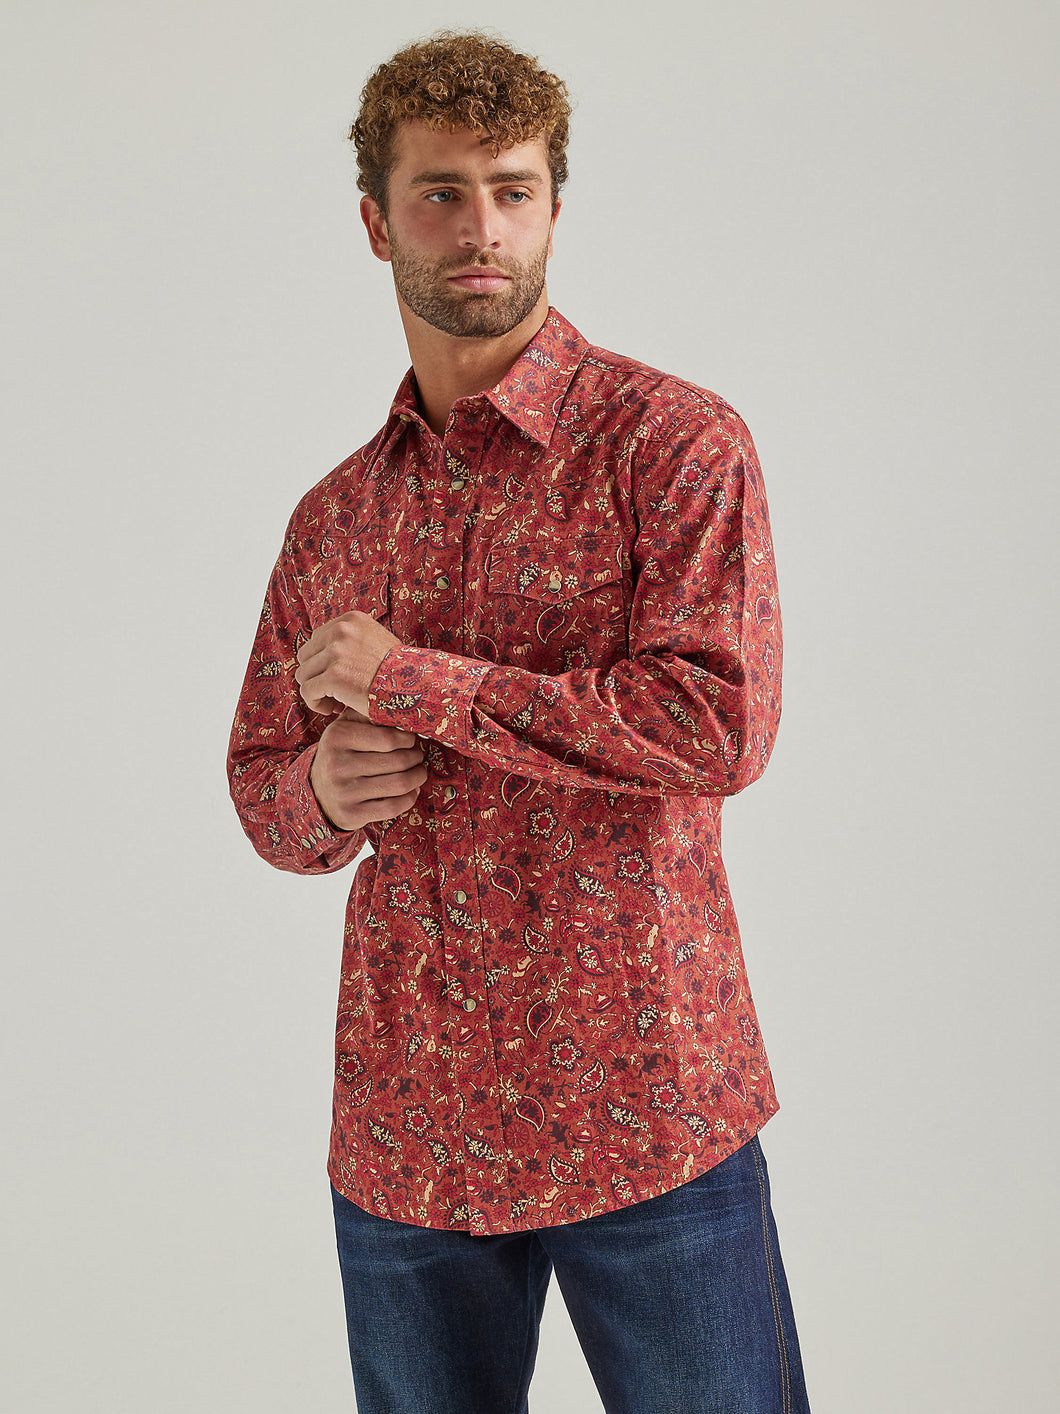 Men's Wrangler Western Snap Long Sleeve Shirt 38179